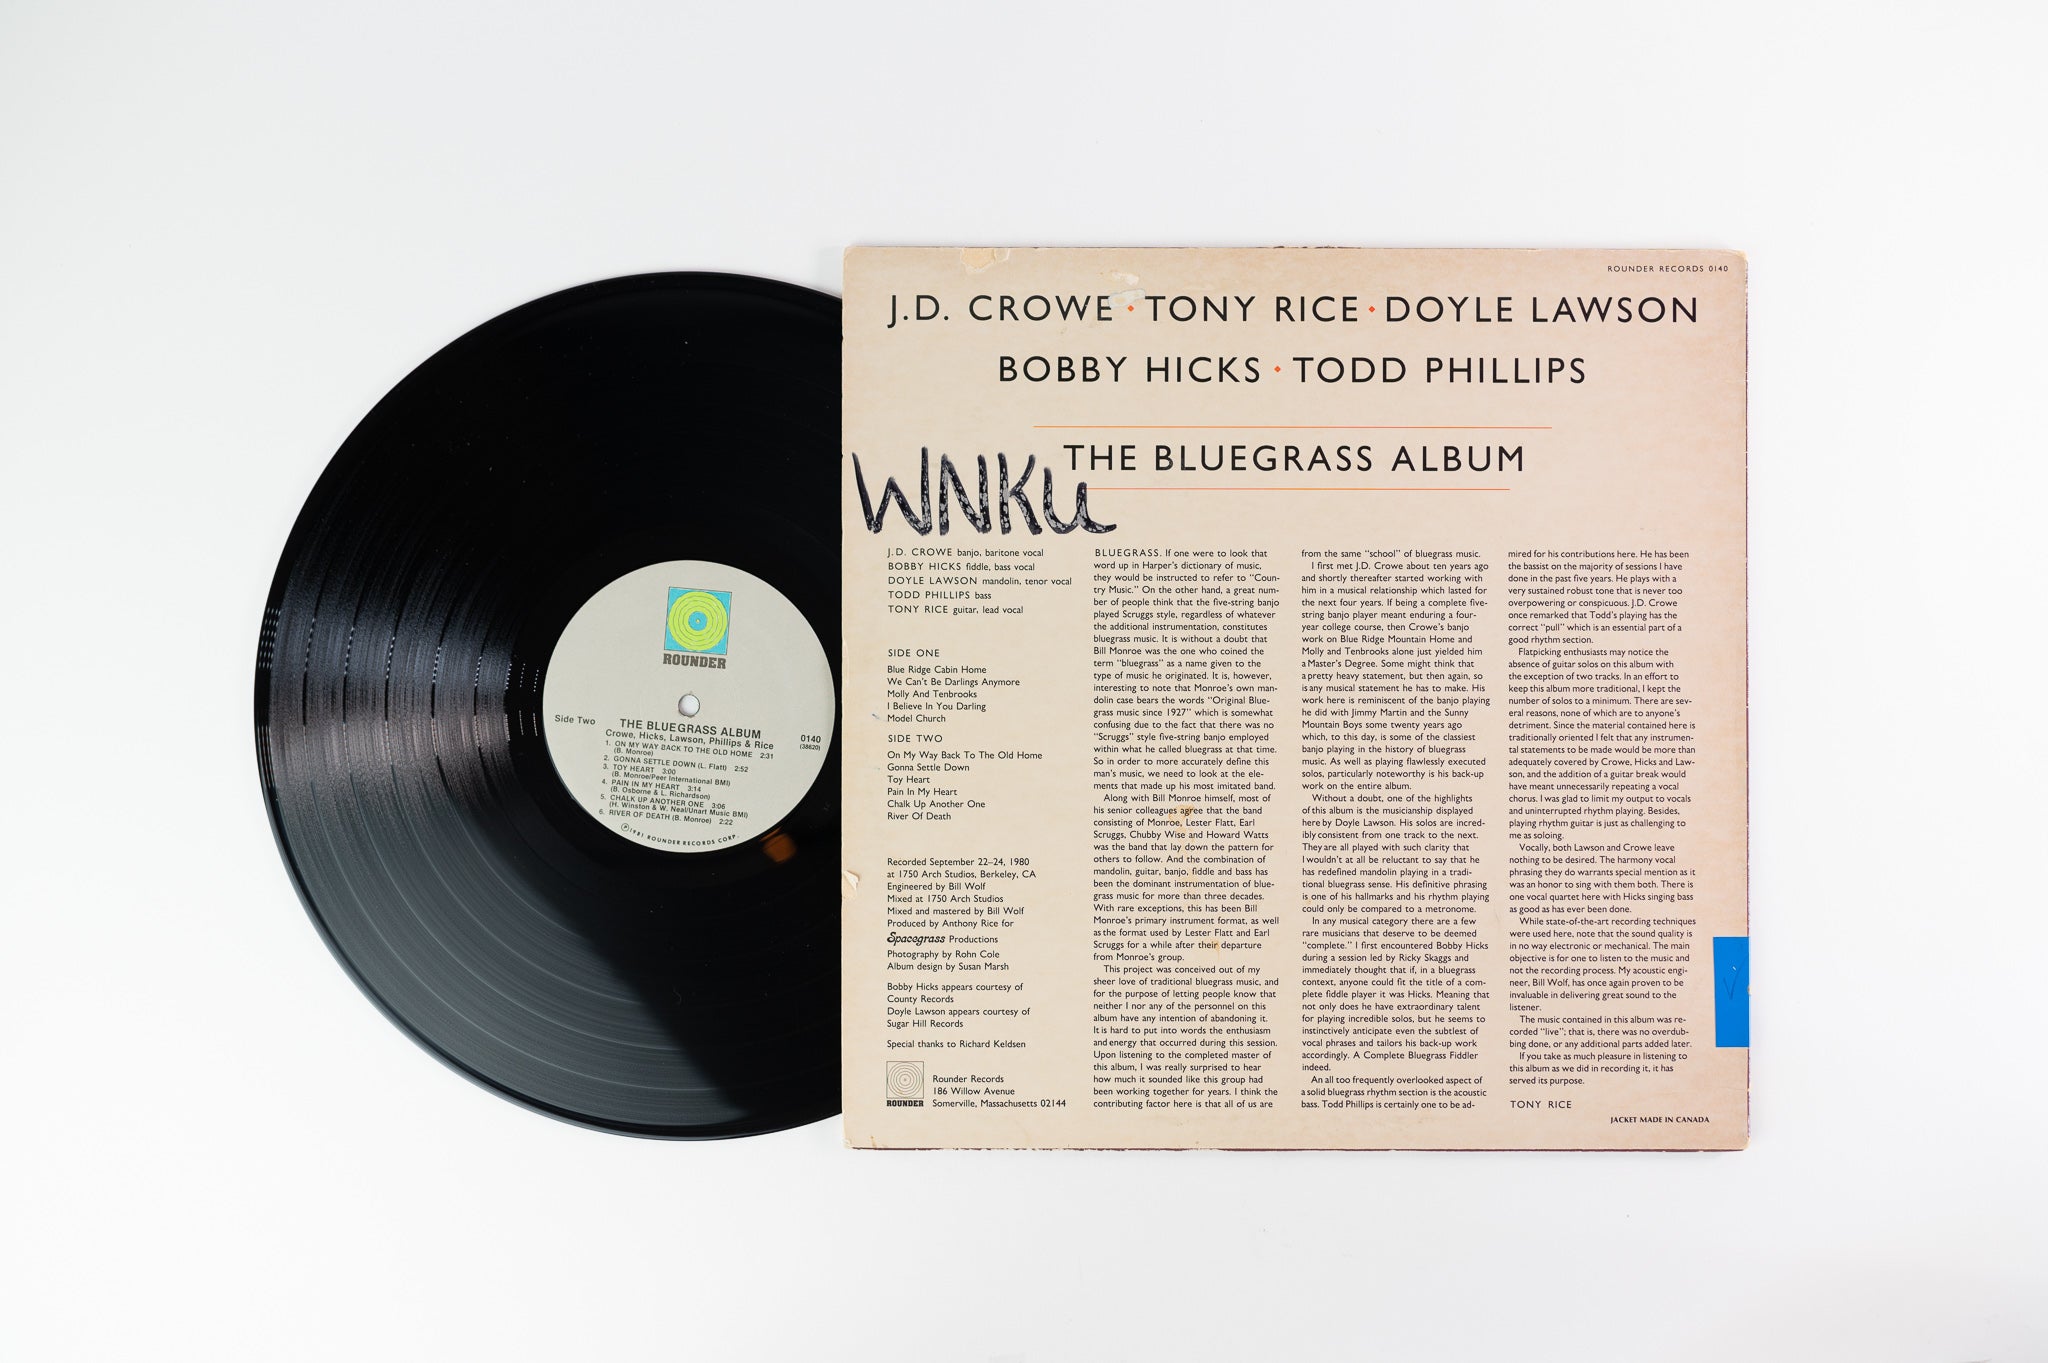 J.D. Crowe Tony Rice & Various - The Bluegrass Album on Rounder